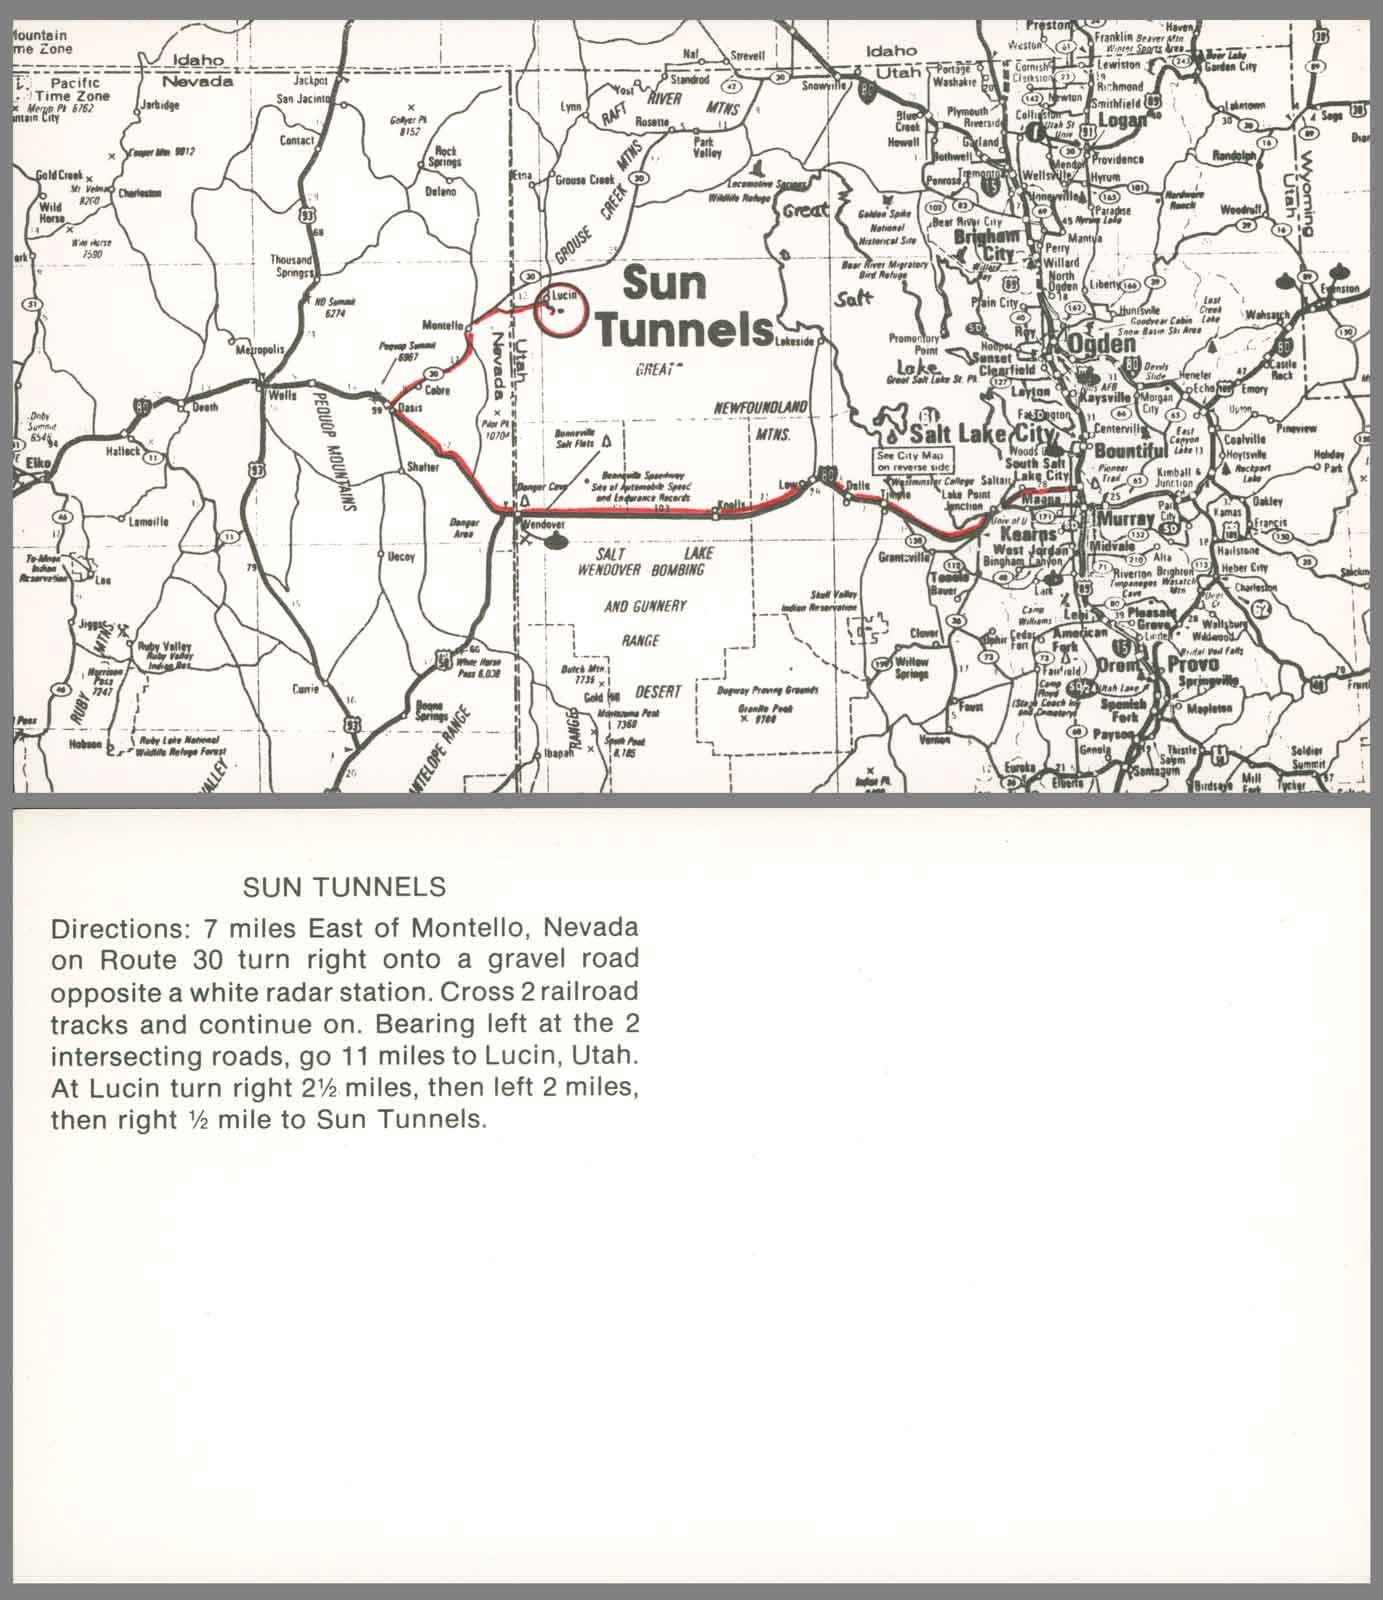 A map postcard invitation to Sun Tunnels.